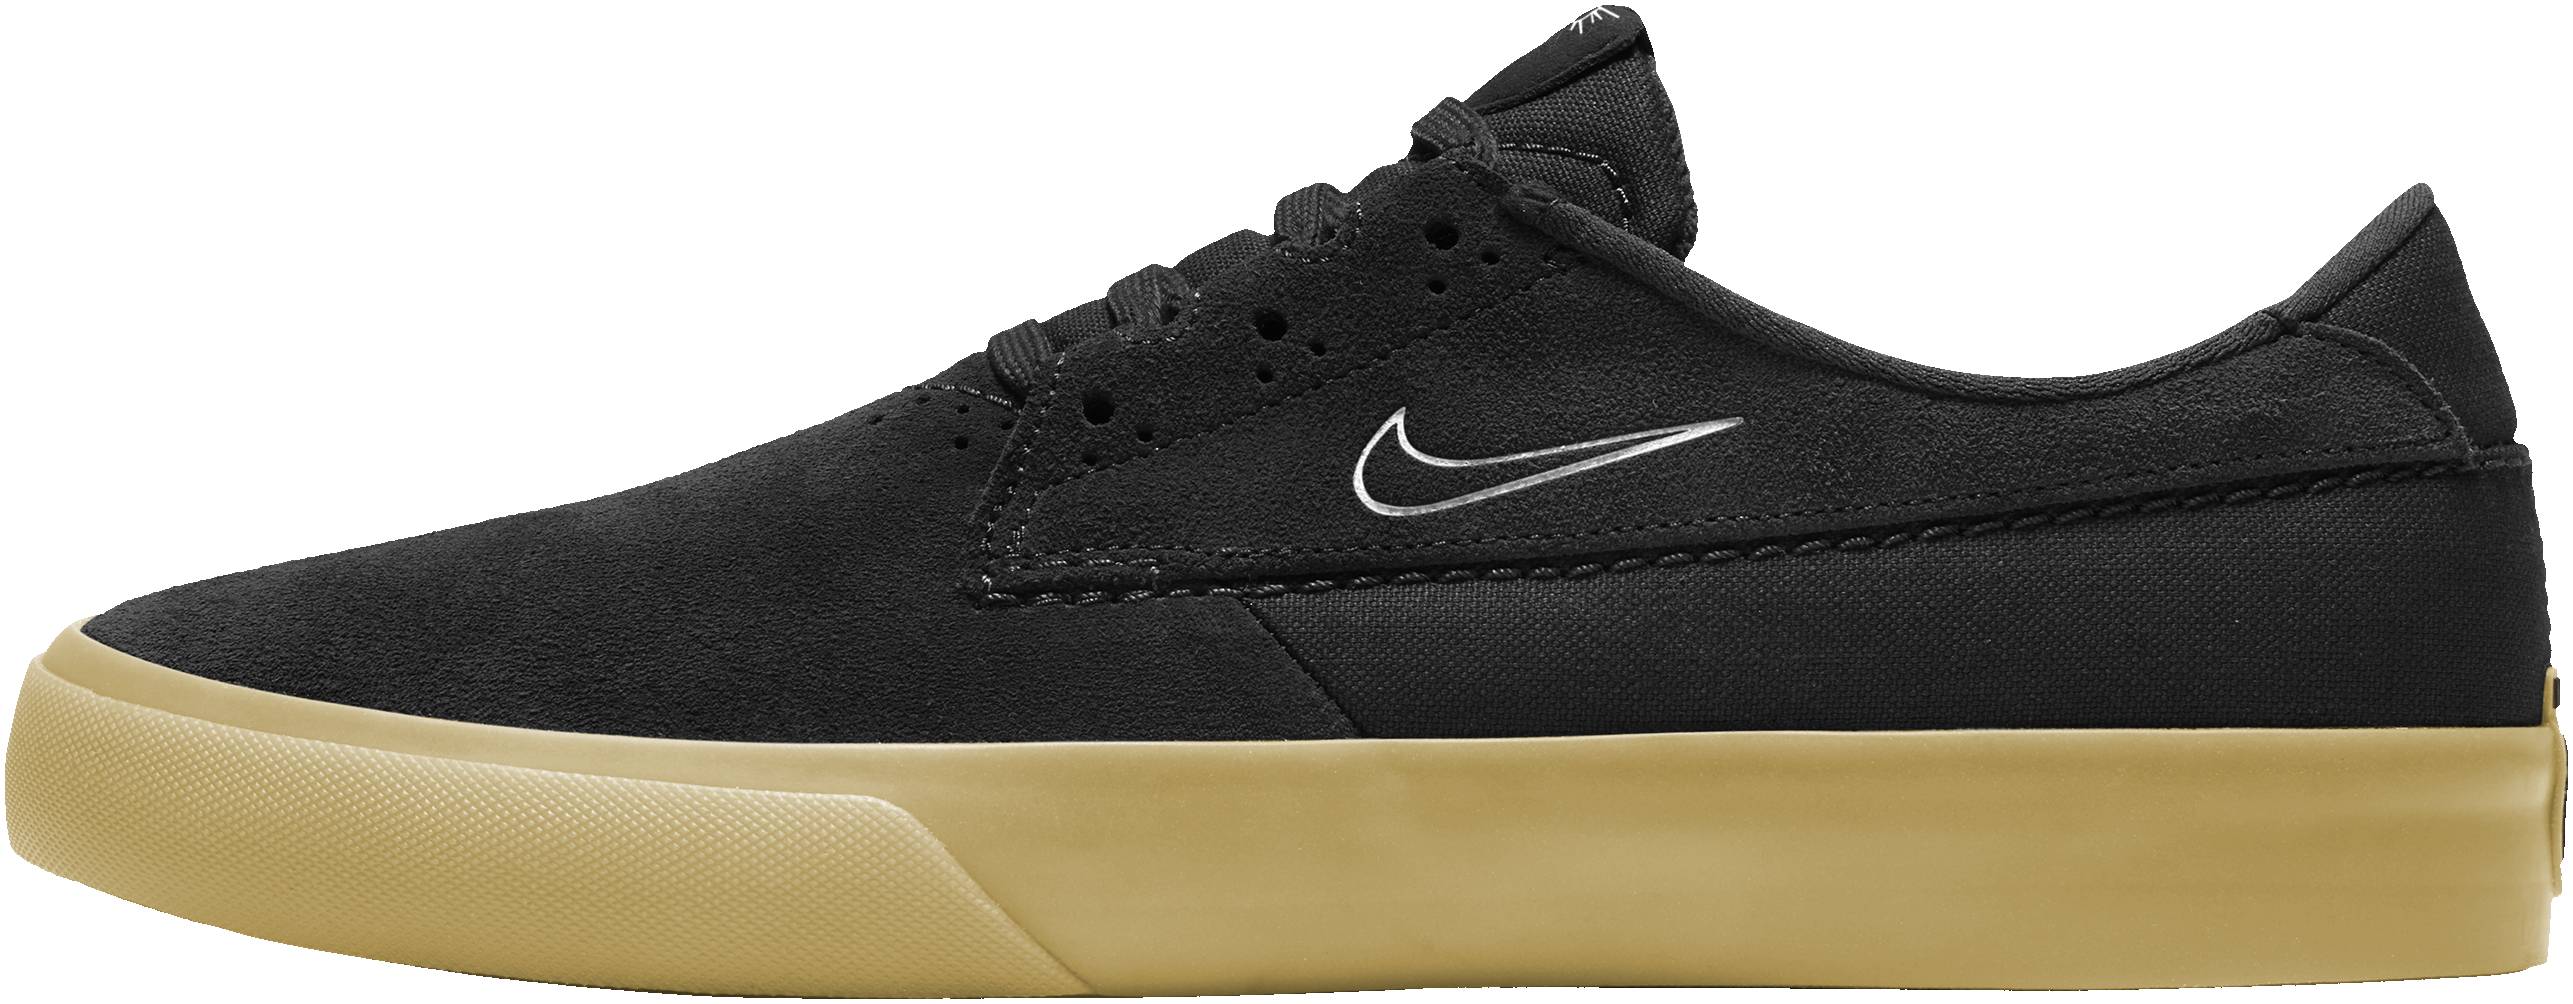 Nike nike sb leather black SB Shane sneakers in 5 colors (only £48) | RunRepeat